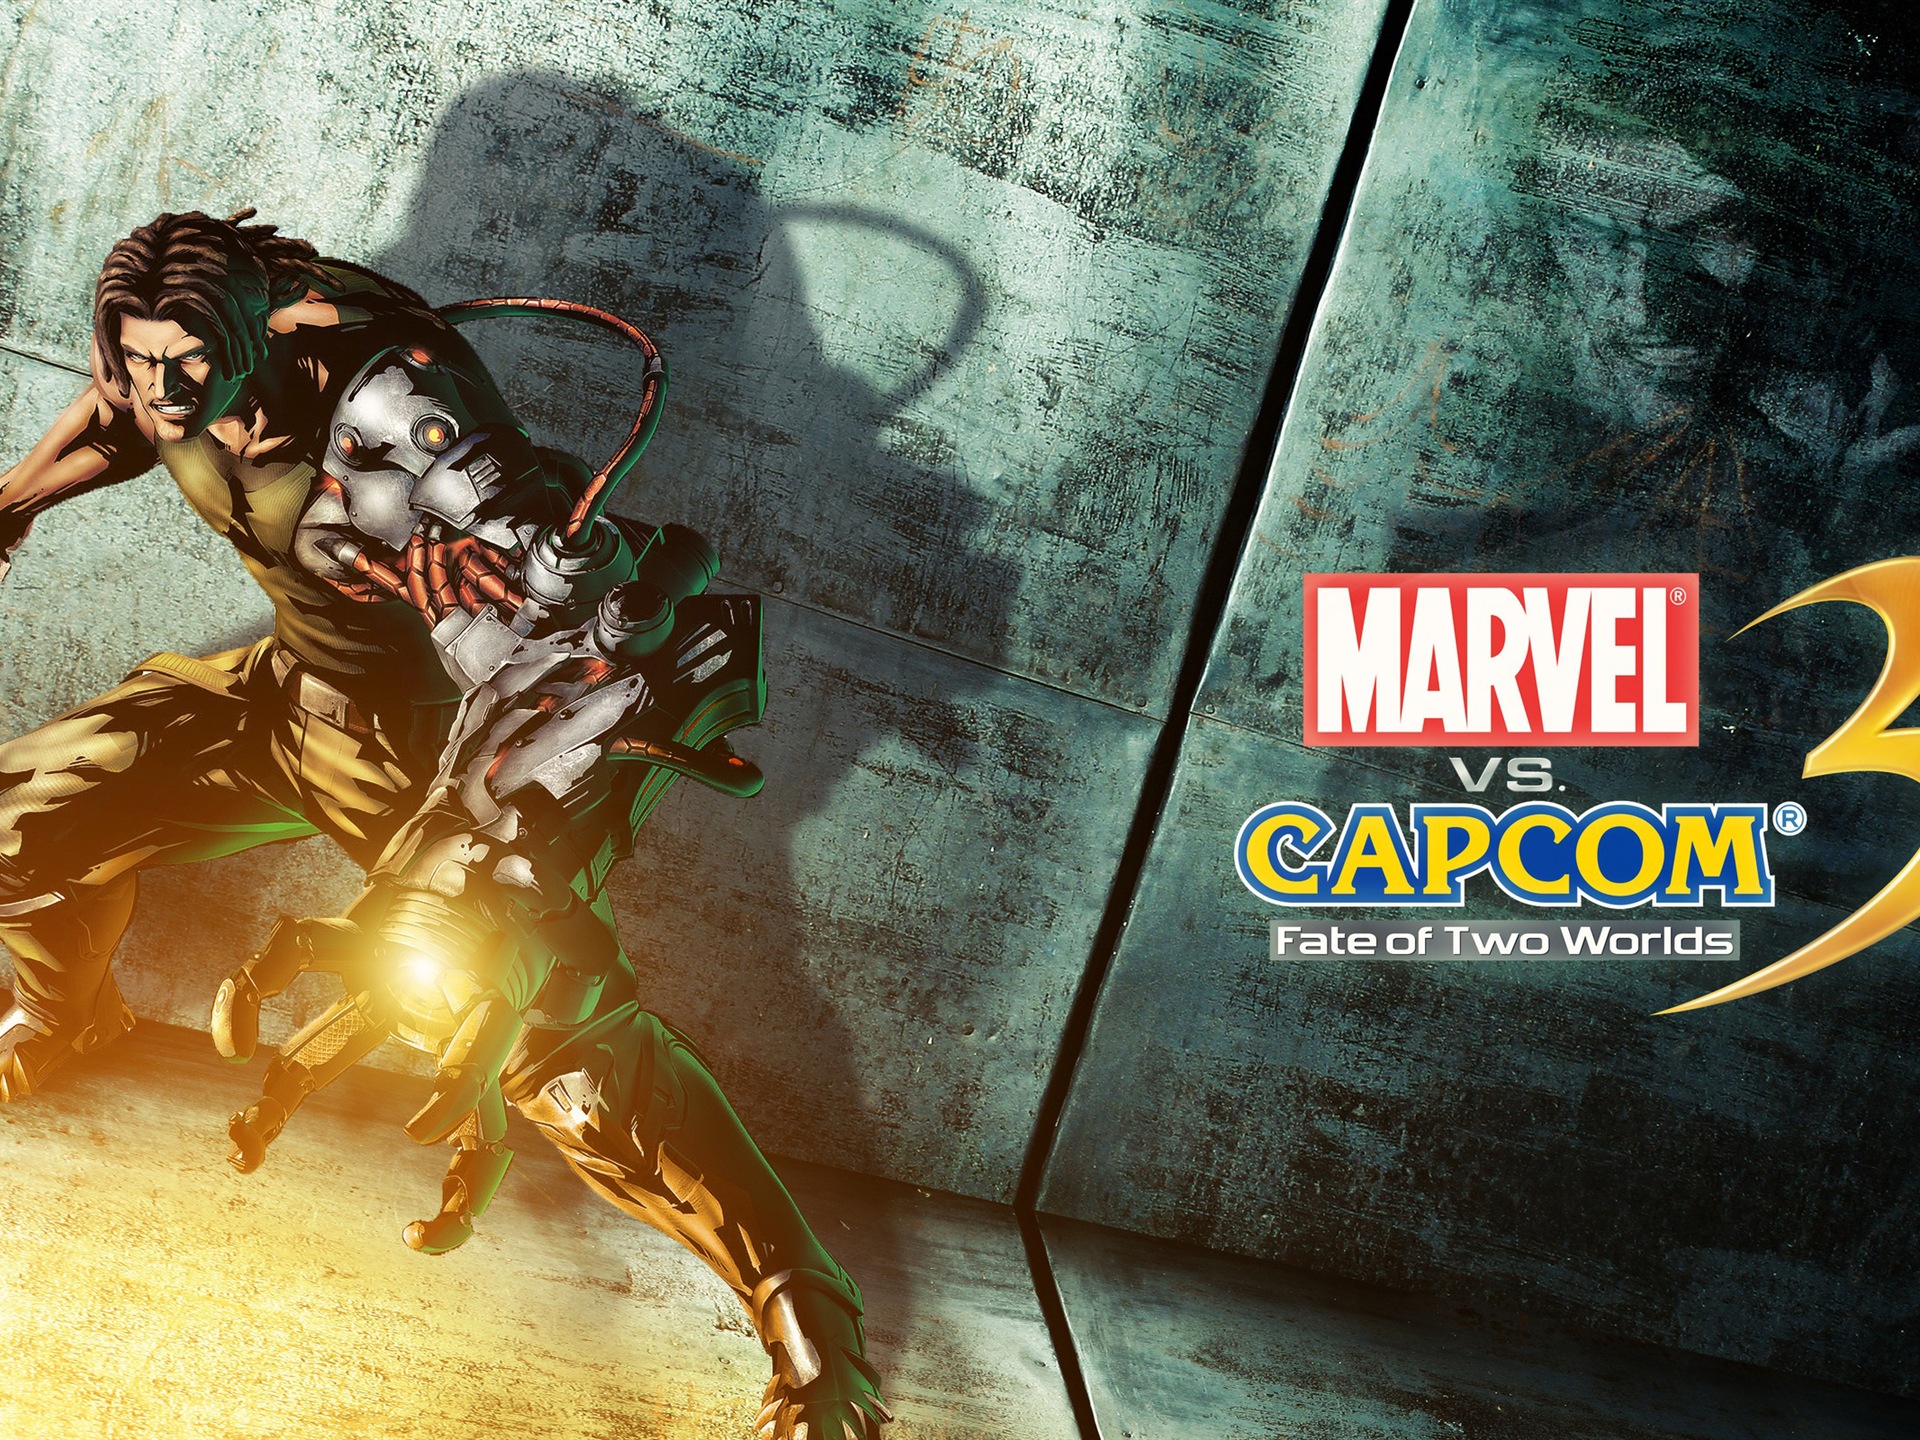 Marvel VS. Capcom 3: Fate of Two Worlds 漫画英雄VS.卡普空3 高清游戏壁纸8 - 1920x1440